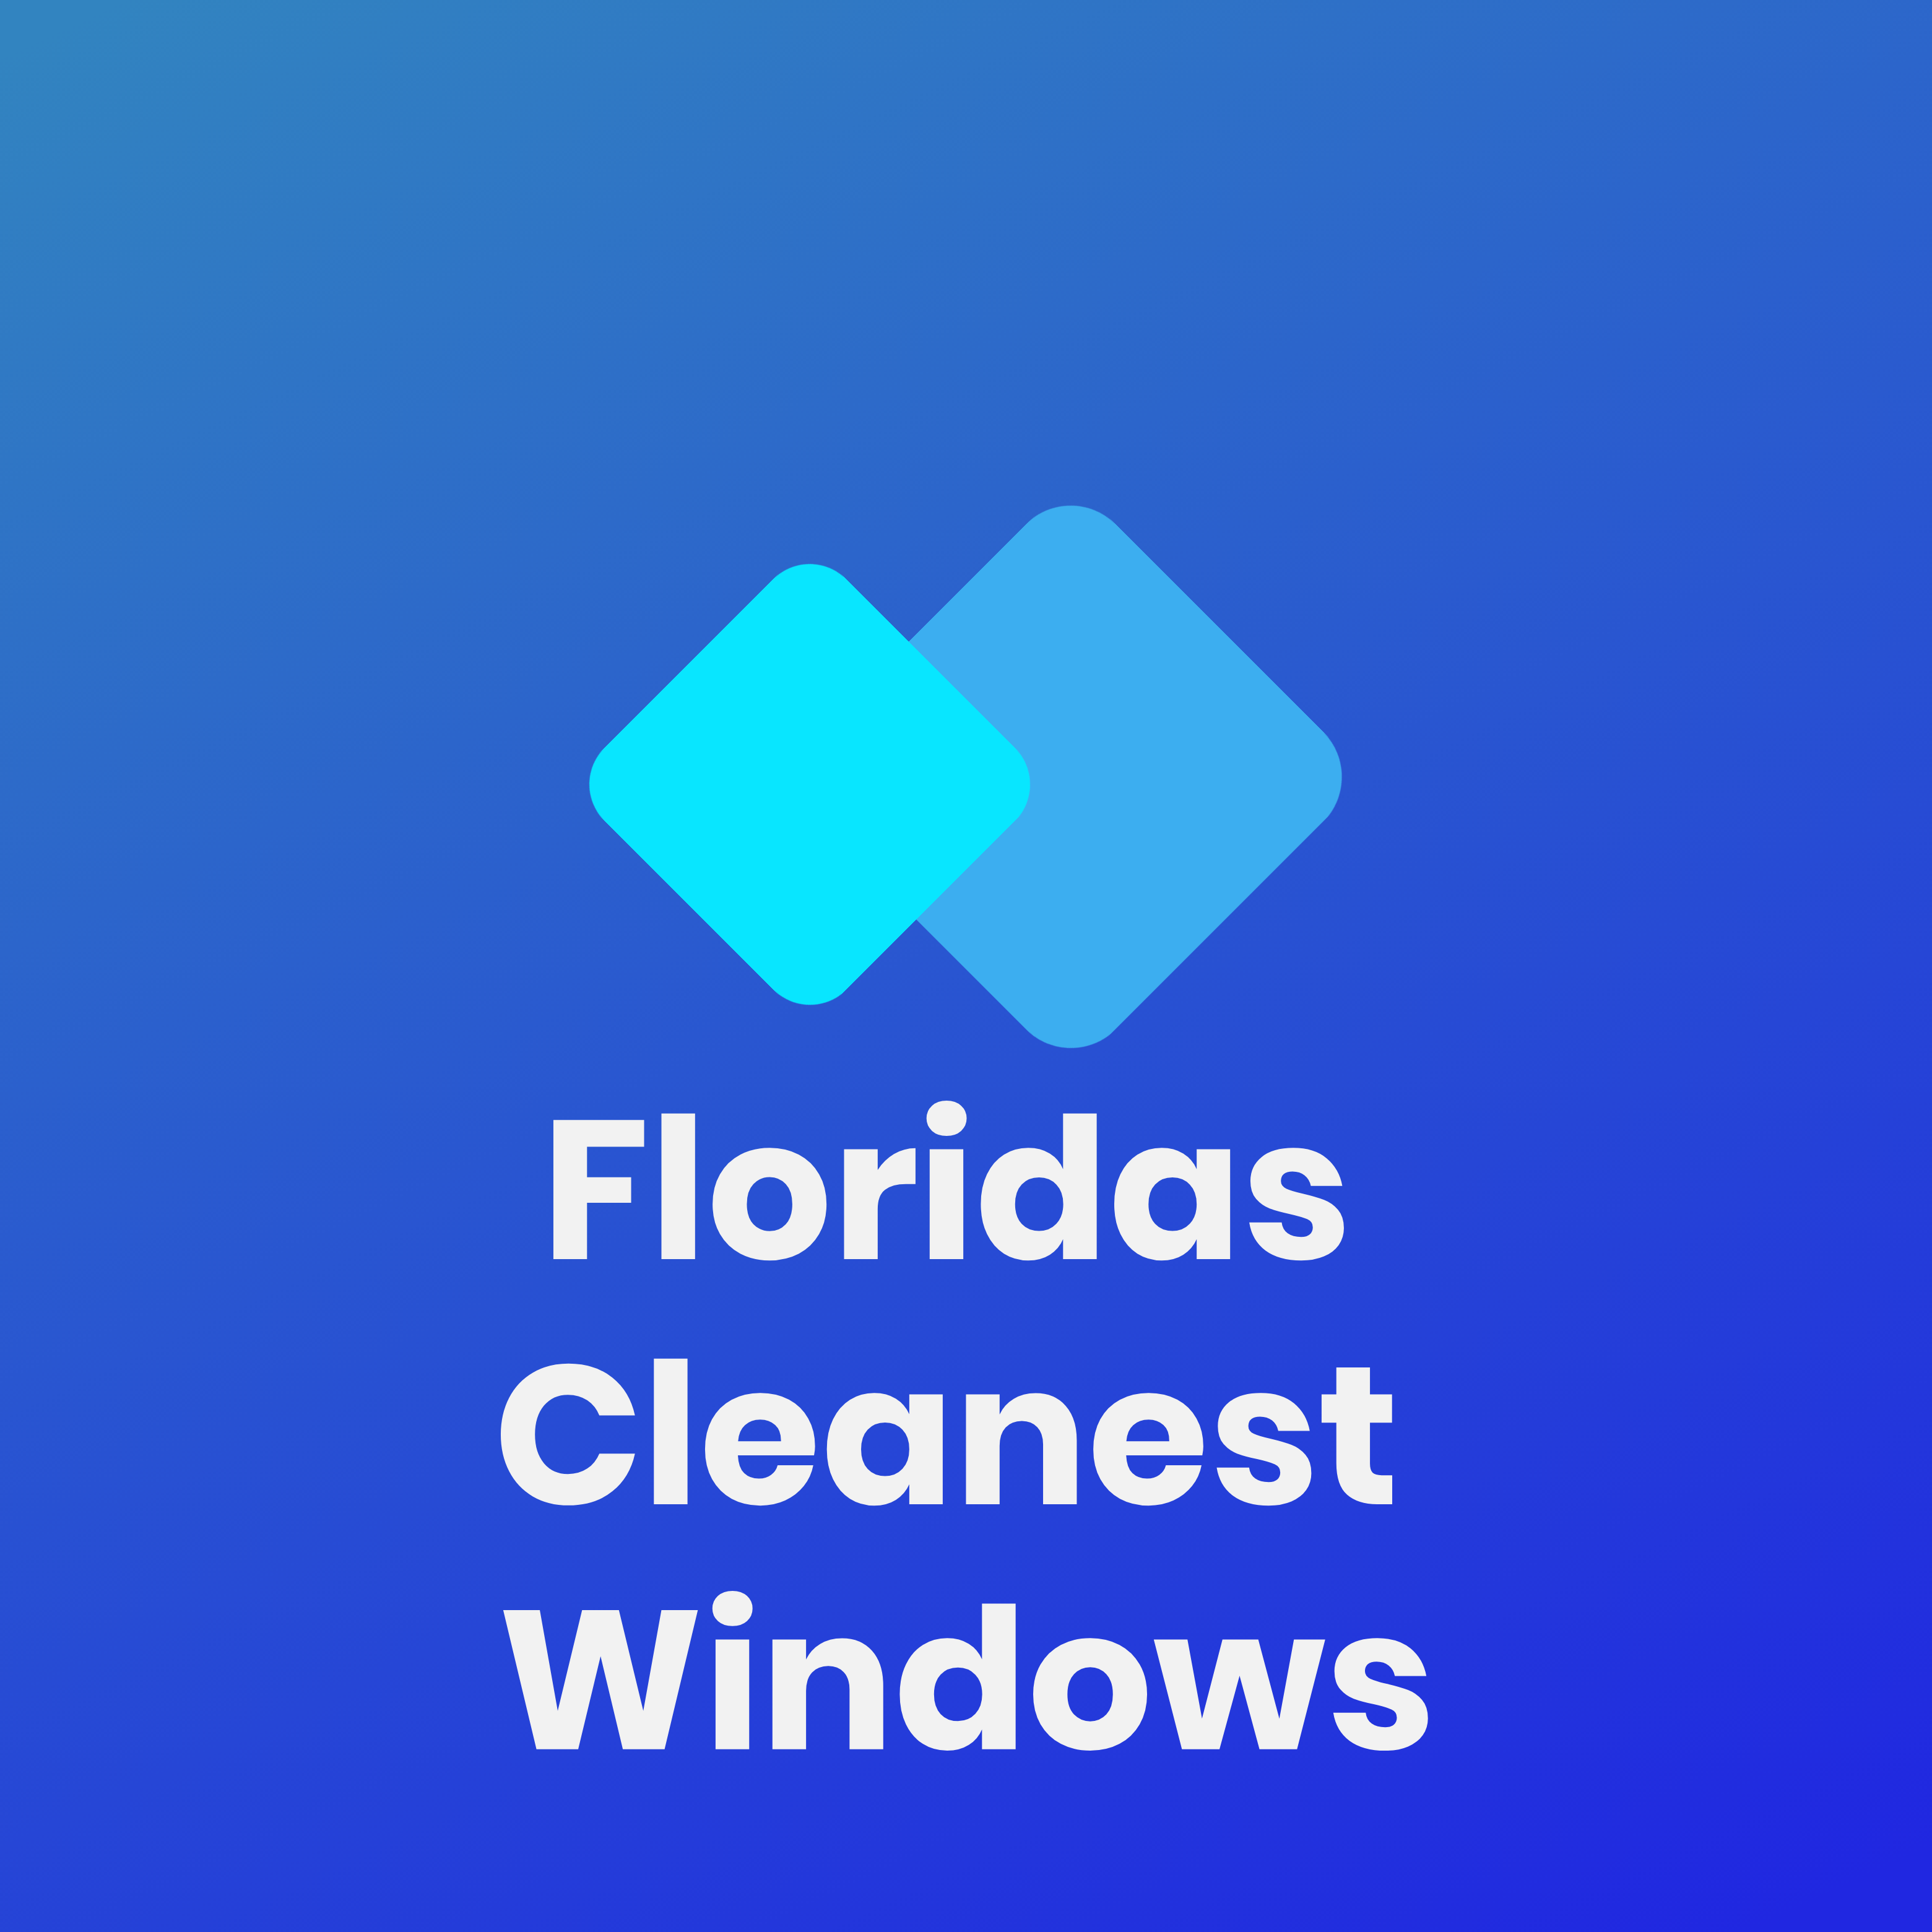 Floridas Cleanest Windows